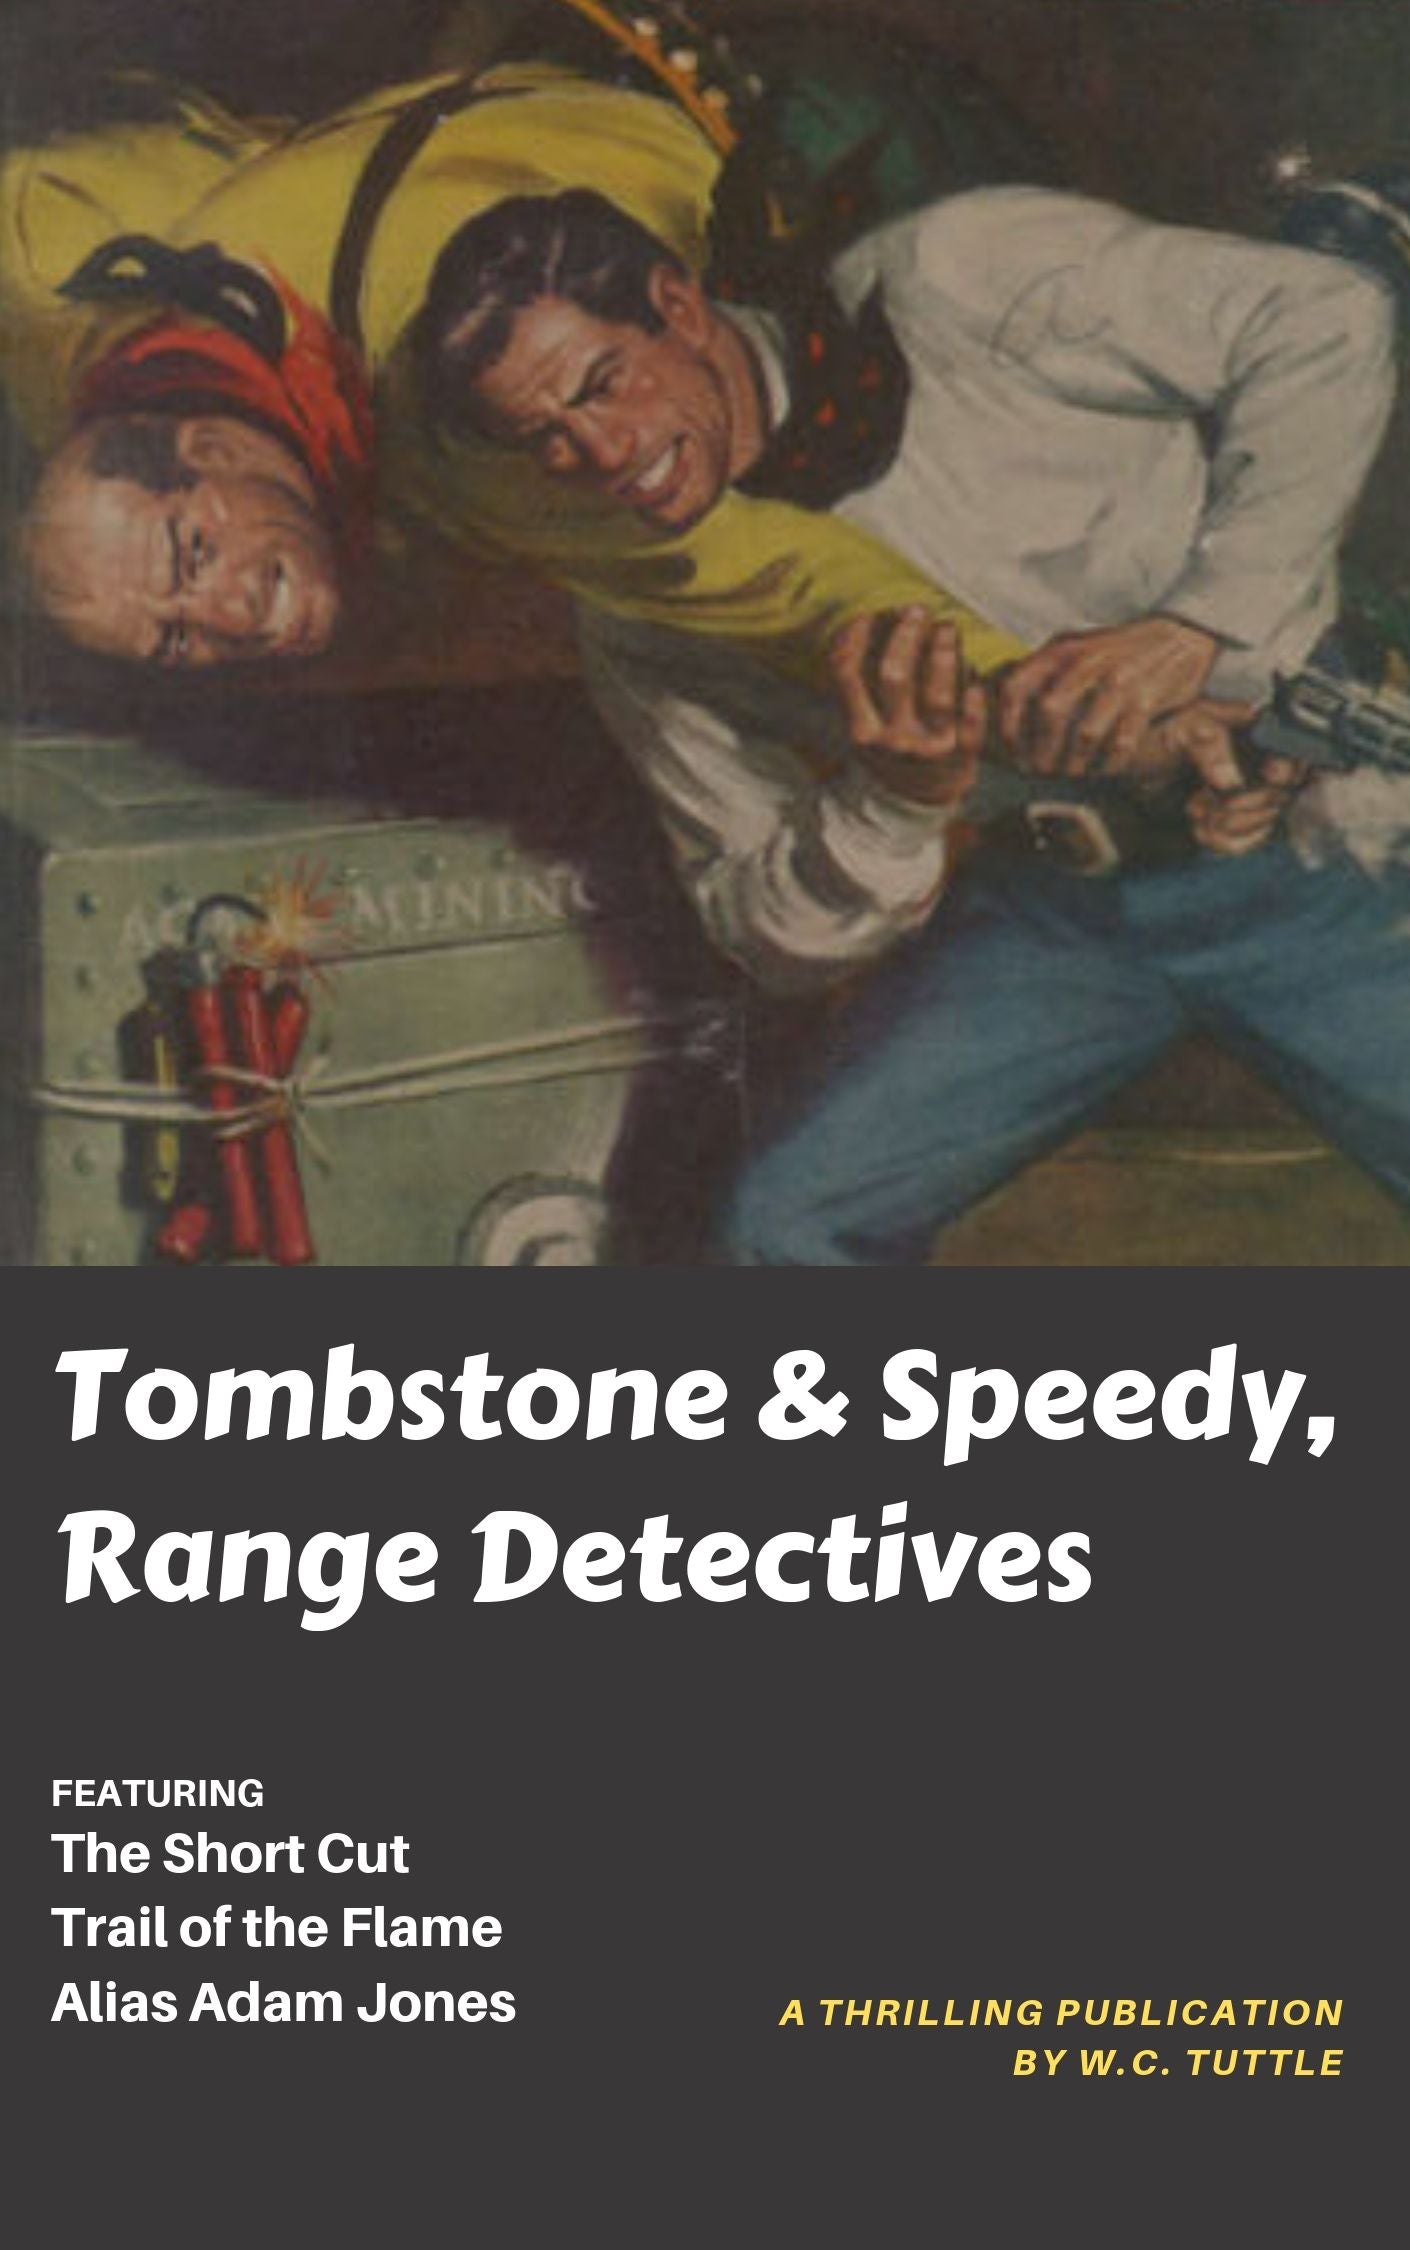 Tombstone & Speedy, Range Detectives by W.C. Tuttle